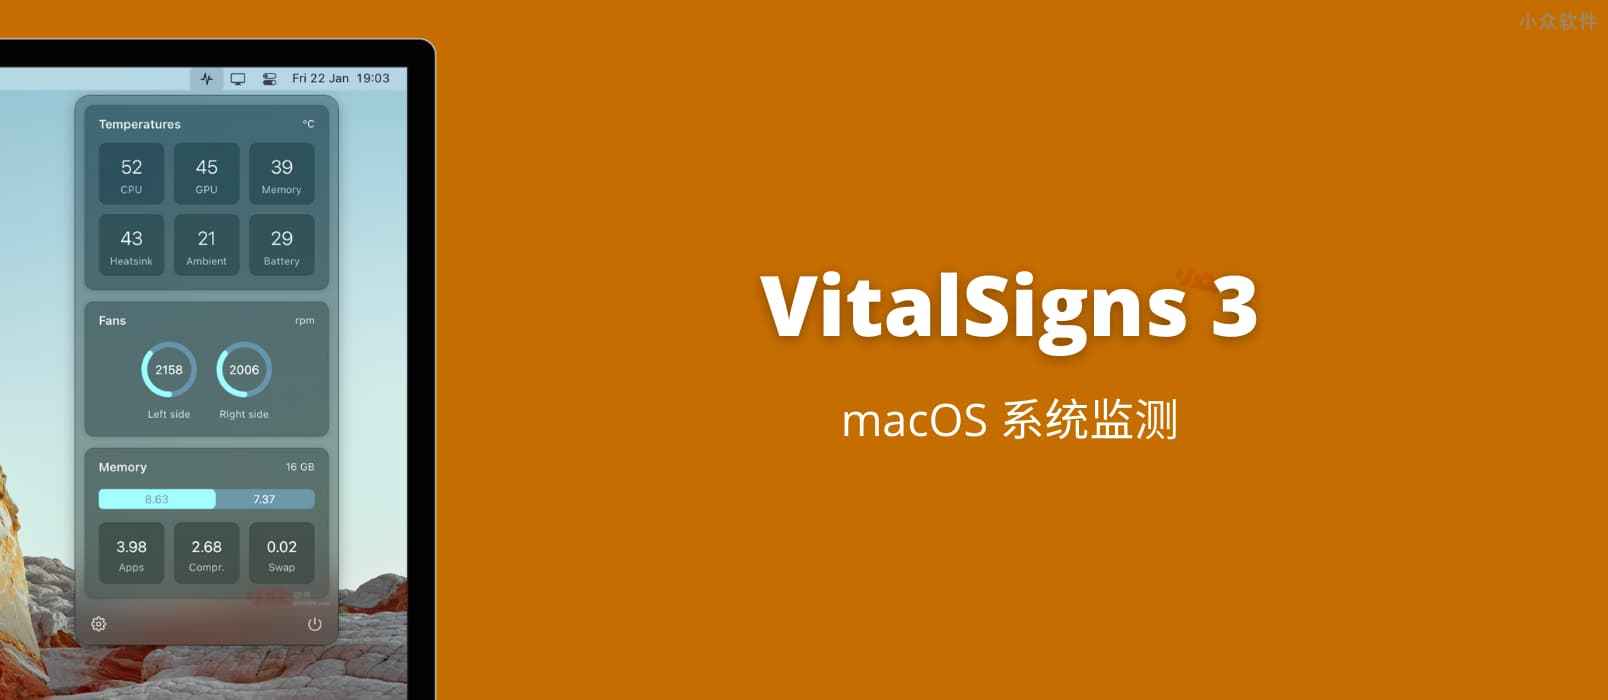 VitalSigns 3 – 免费的 macOS 系统监测工具，包括 10+ 种传感器数据